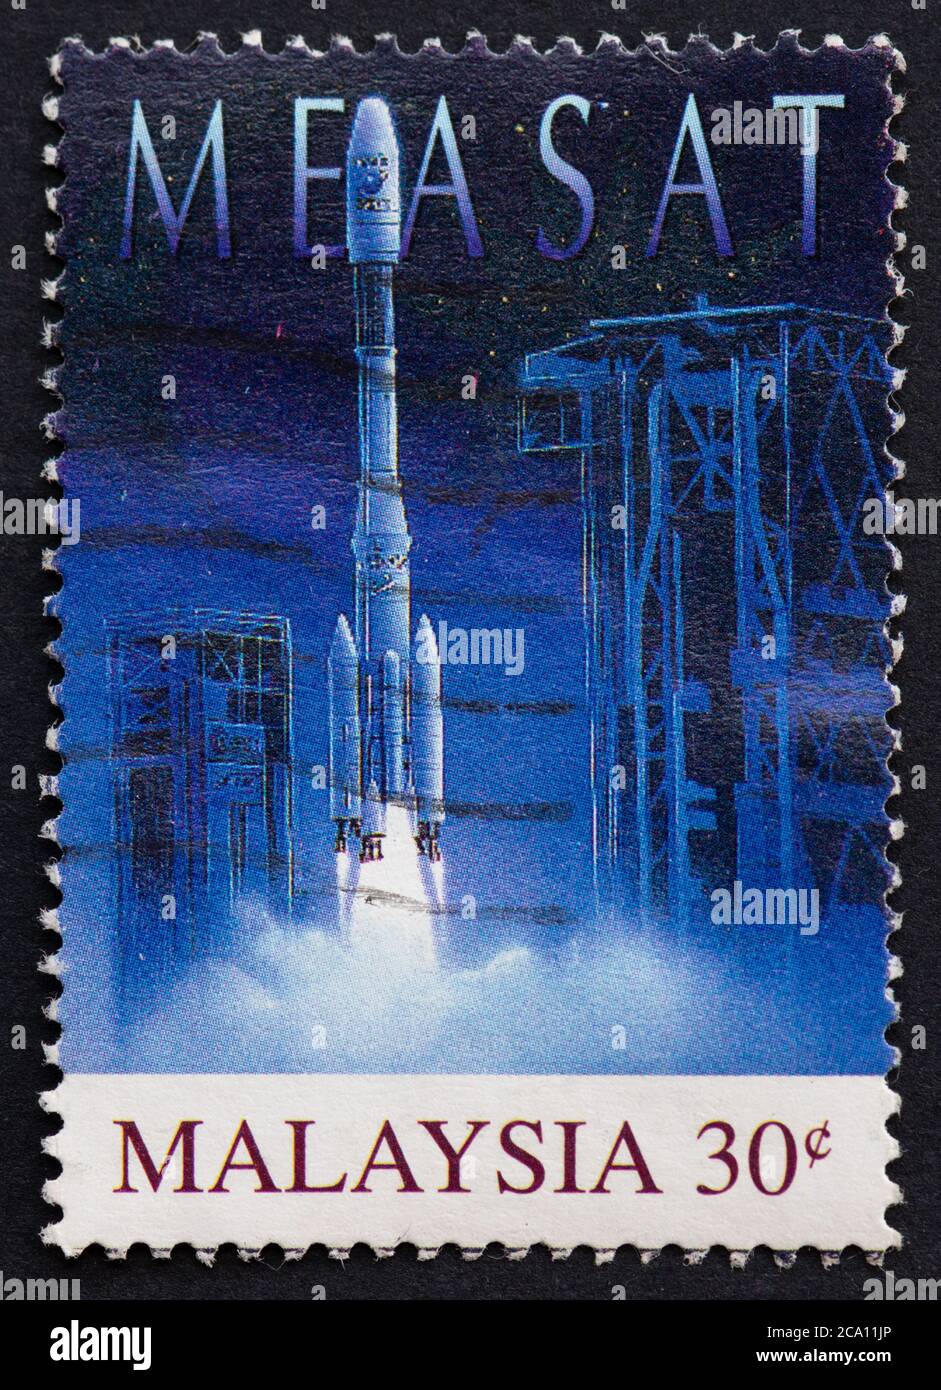 MEASAT - Malaysia Asia orientale satellite - 30 c affrancatura Francobollo - Malesia 1996 Foto Stock